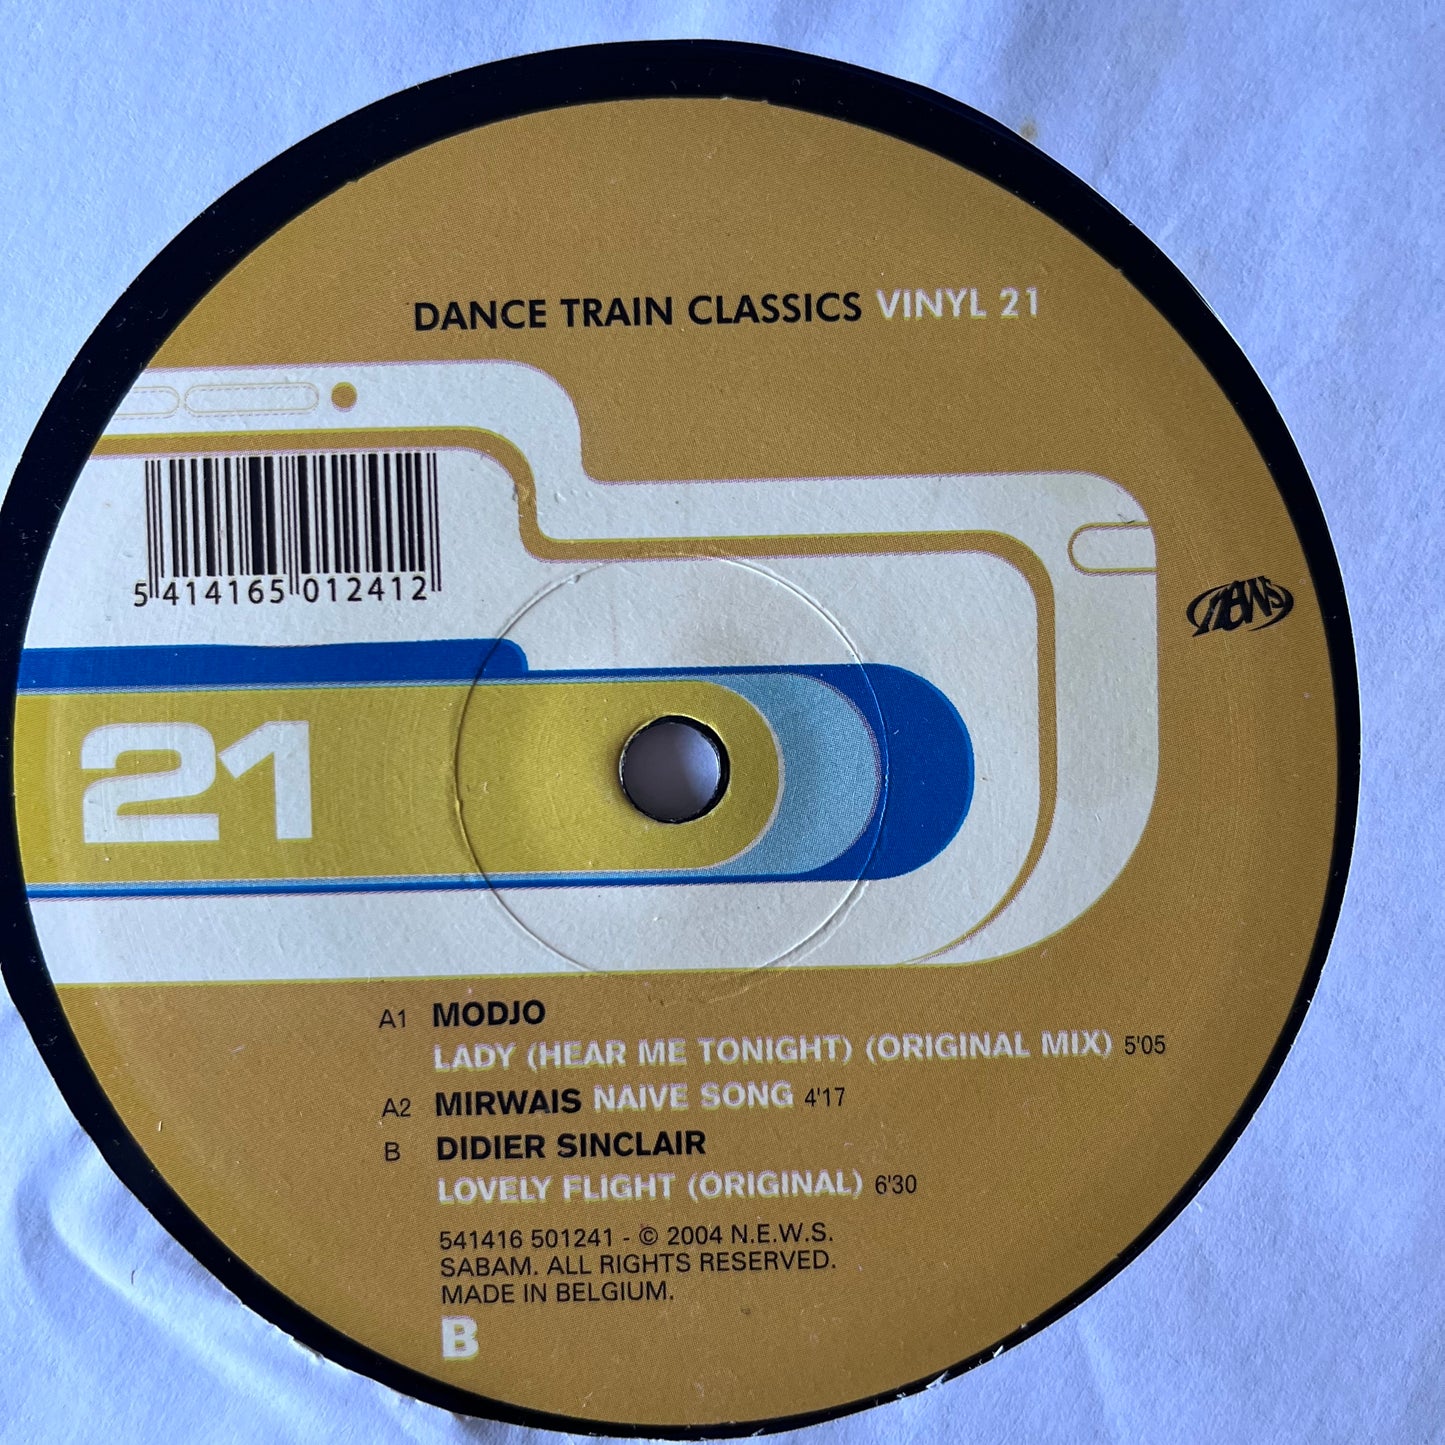 Dance Train Classics Vol 21 3 Track 12inch Vinyl Record 2004